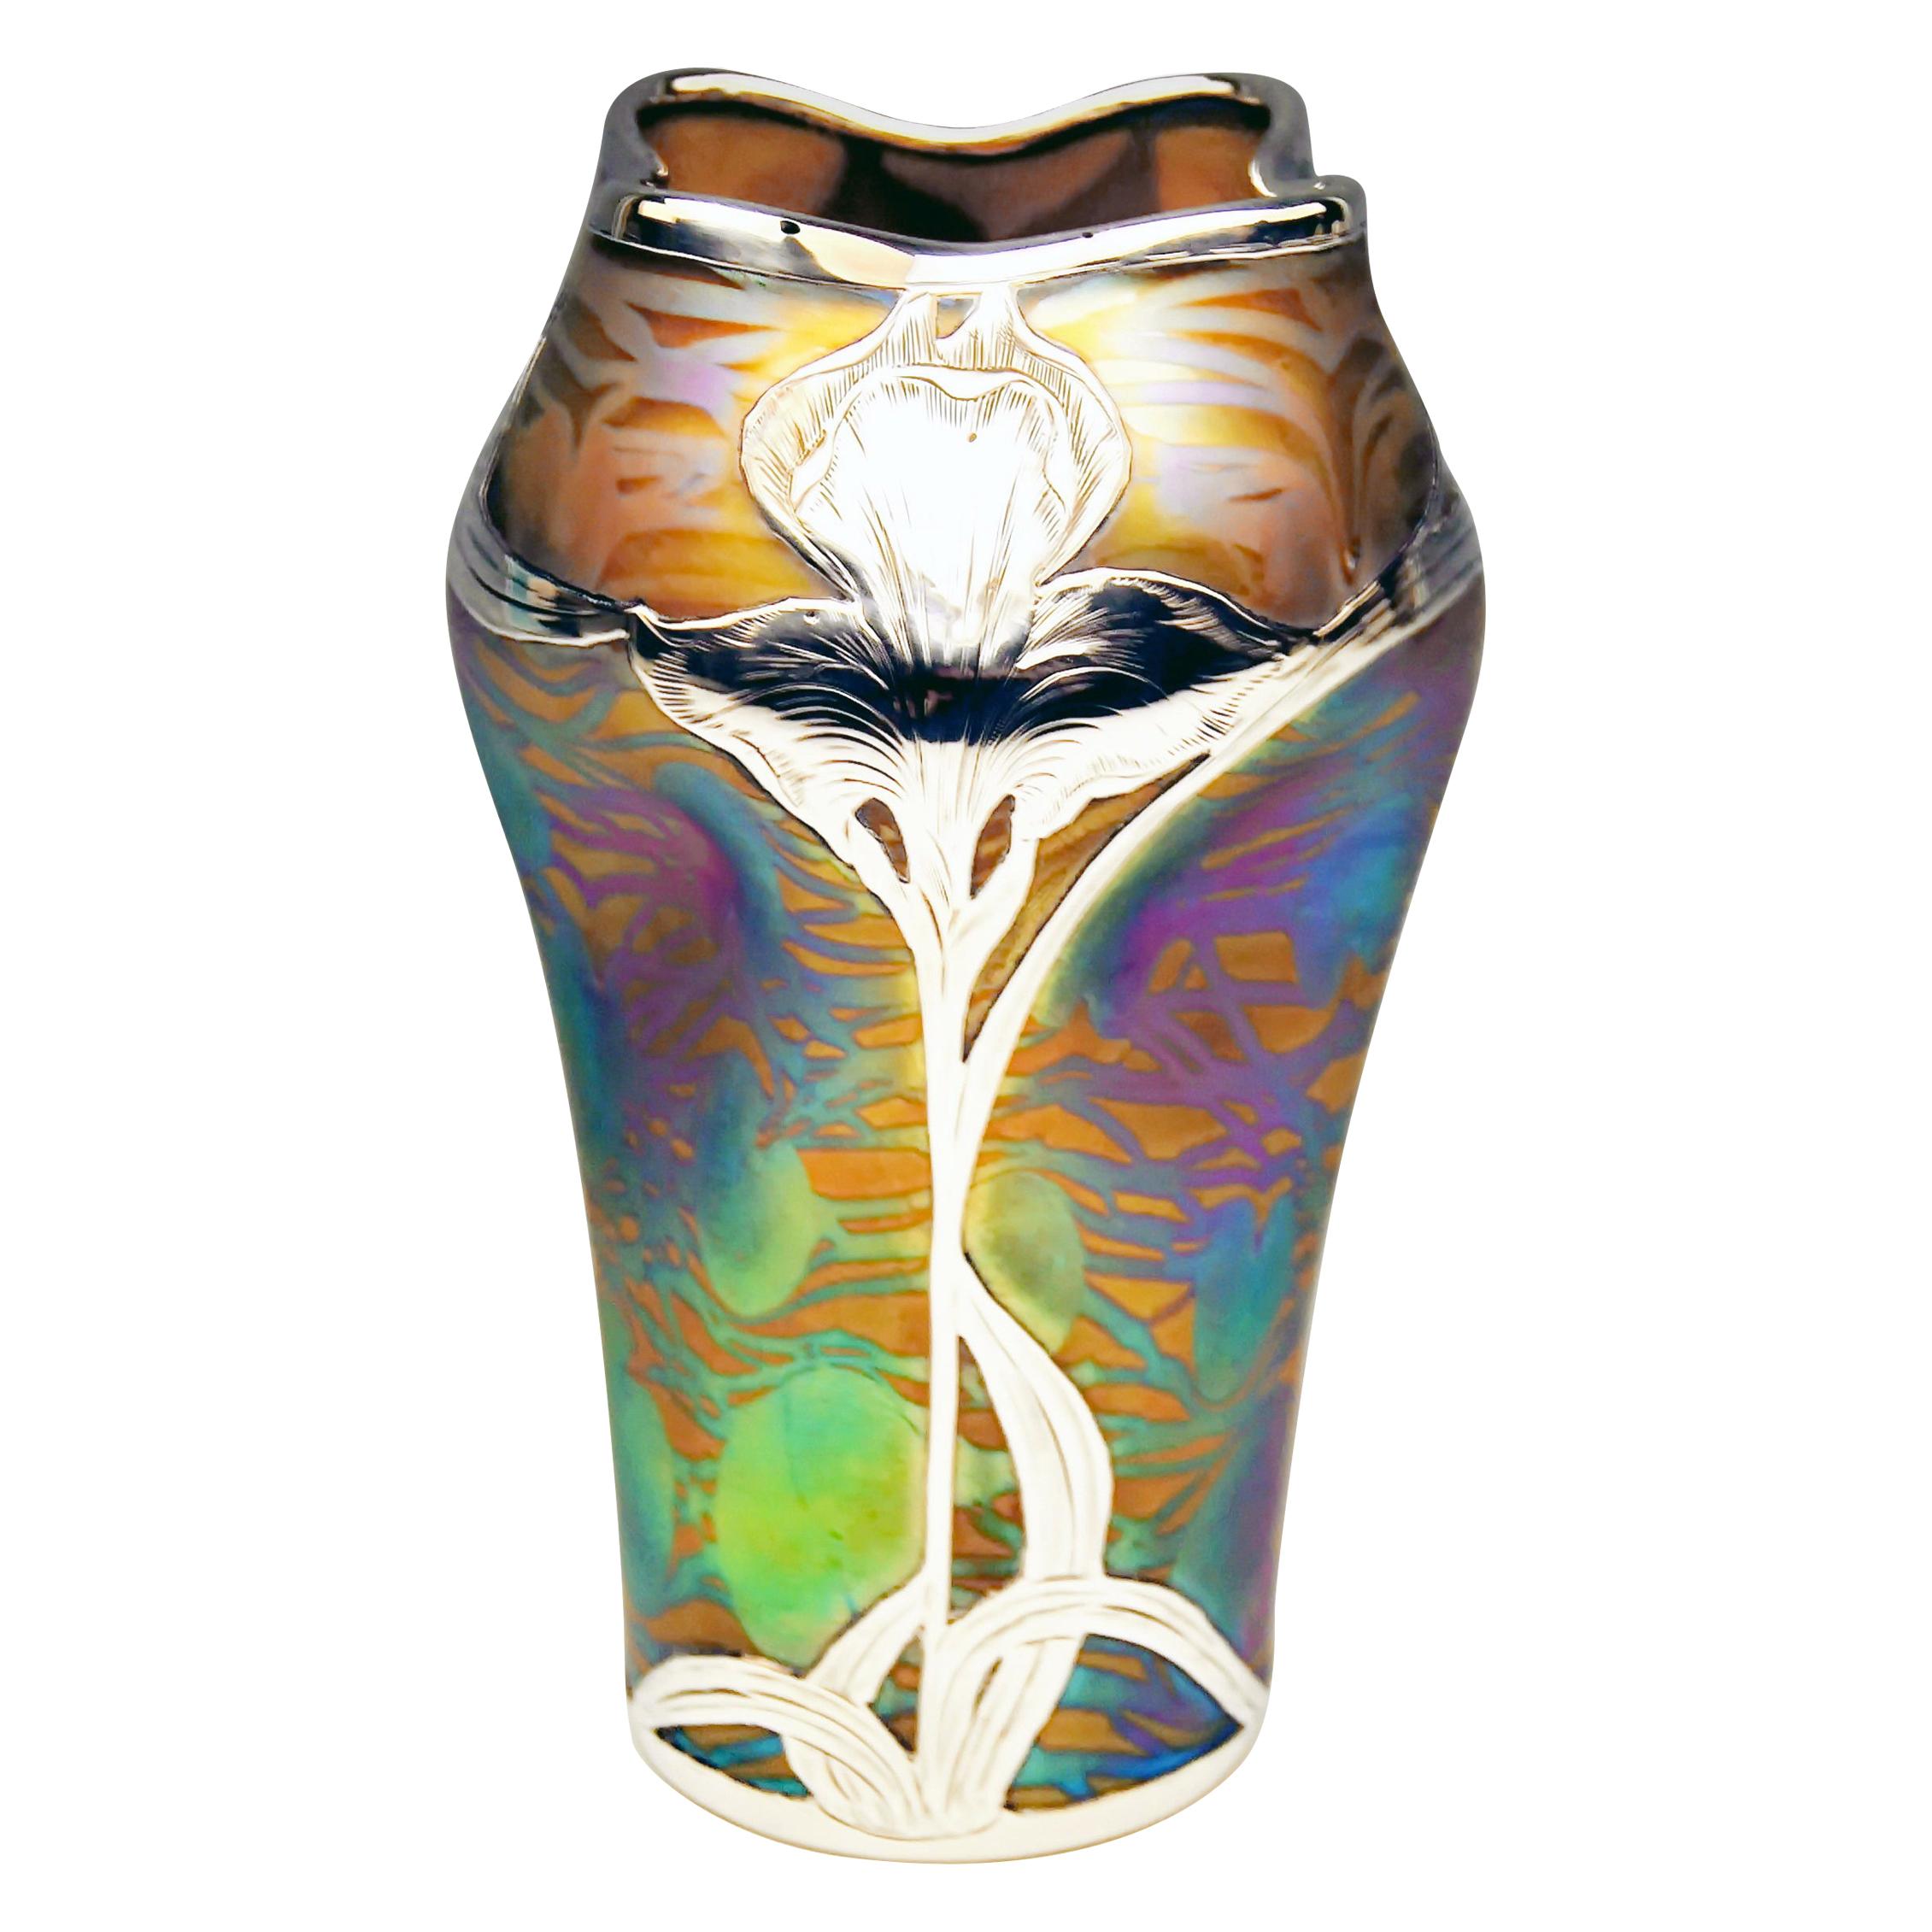 Vase Loetz Bohemia Art Nouveau Decor Phaenomen Genre 2-474 Made circa 1902